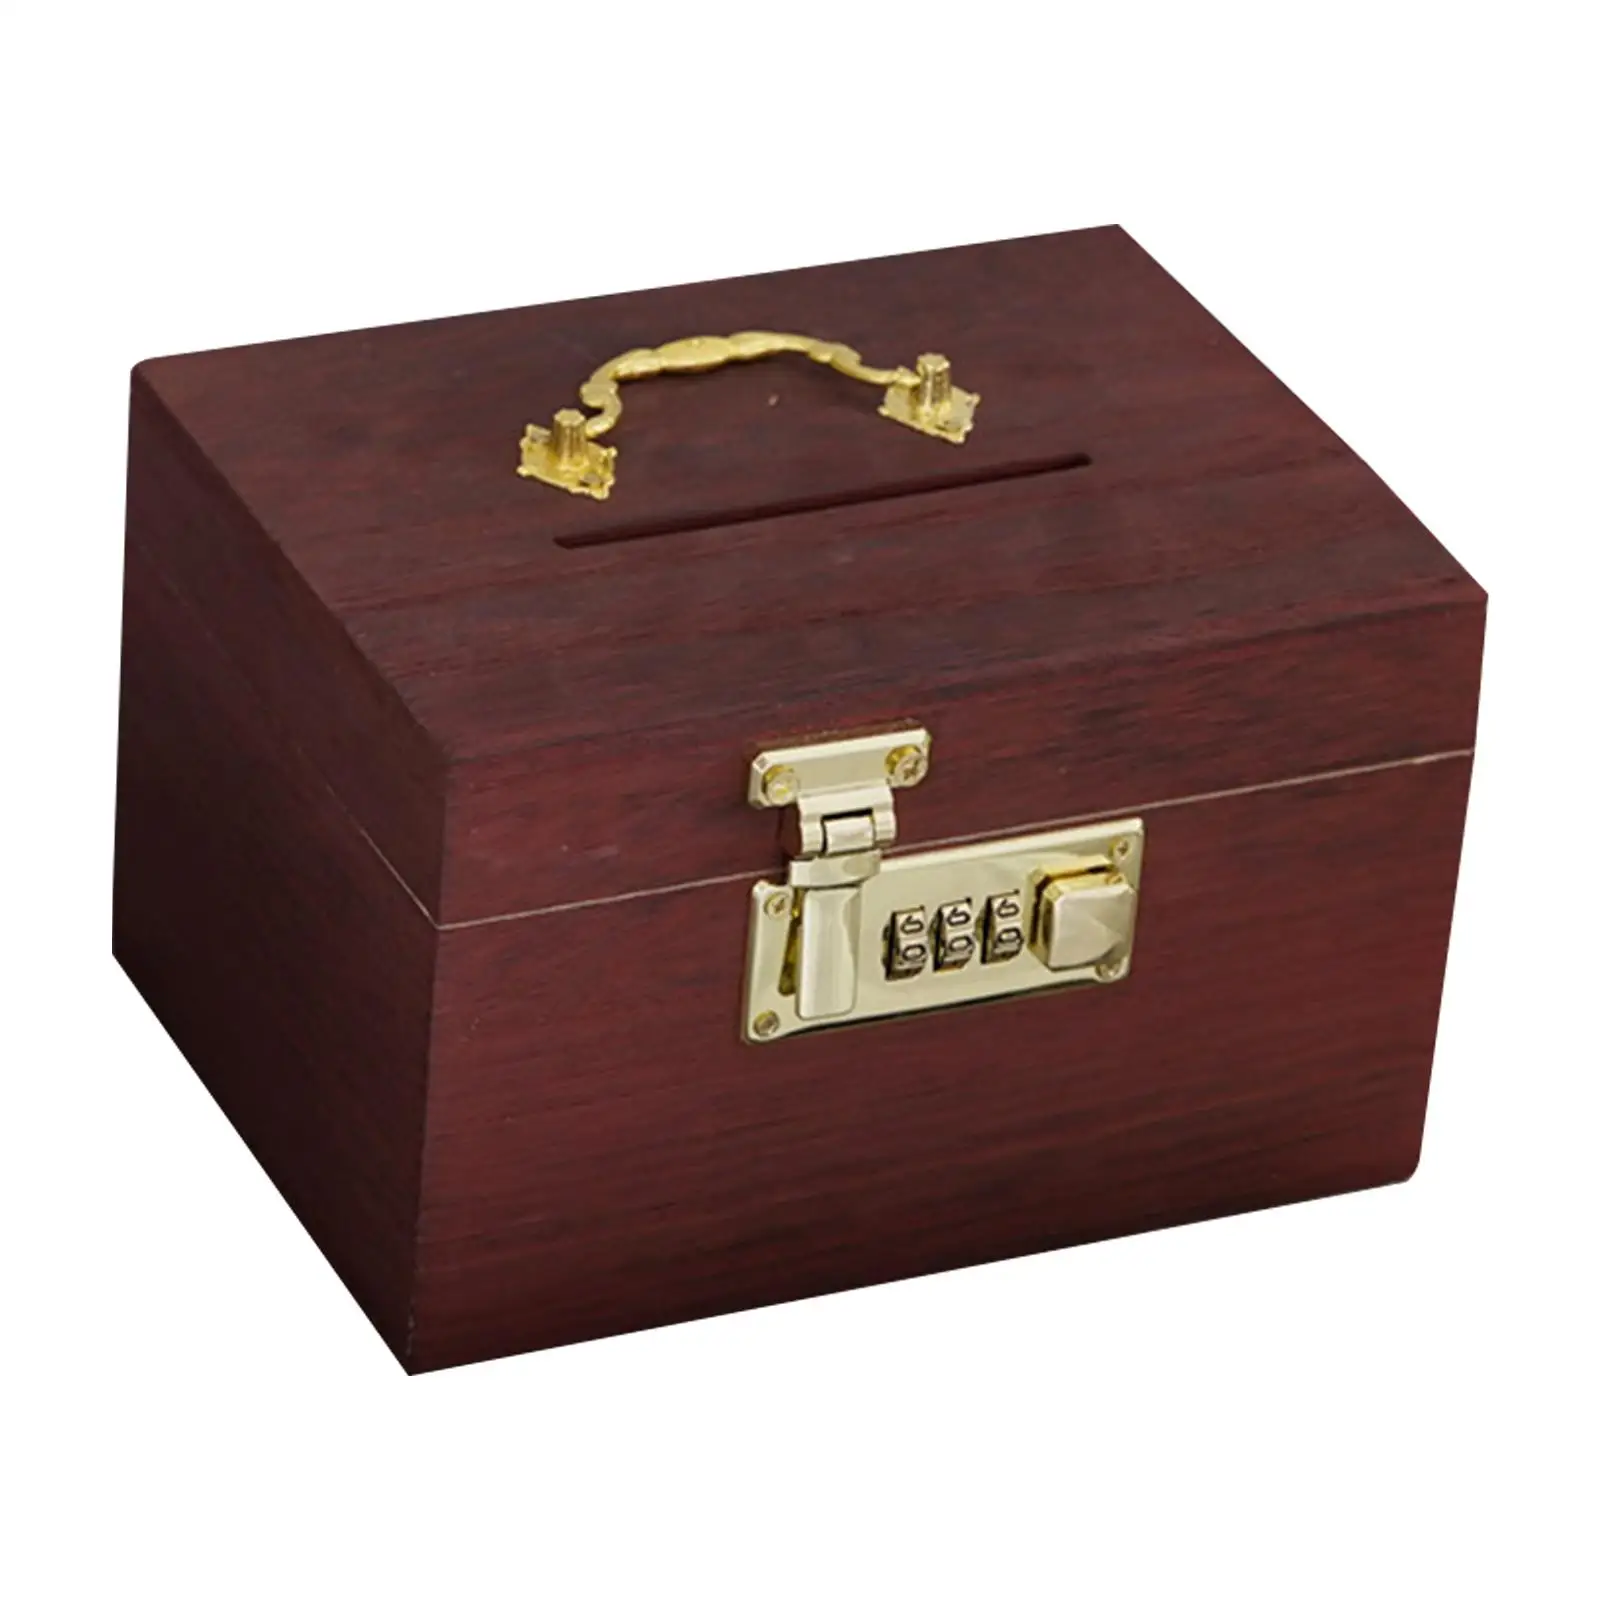 Piggy Bank Decorative Versatile with Lock Collection Saving Box Treasure Box Vintage for Kids Birthday Gifts Housewarming